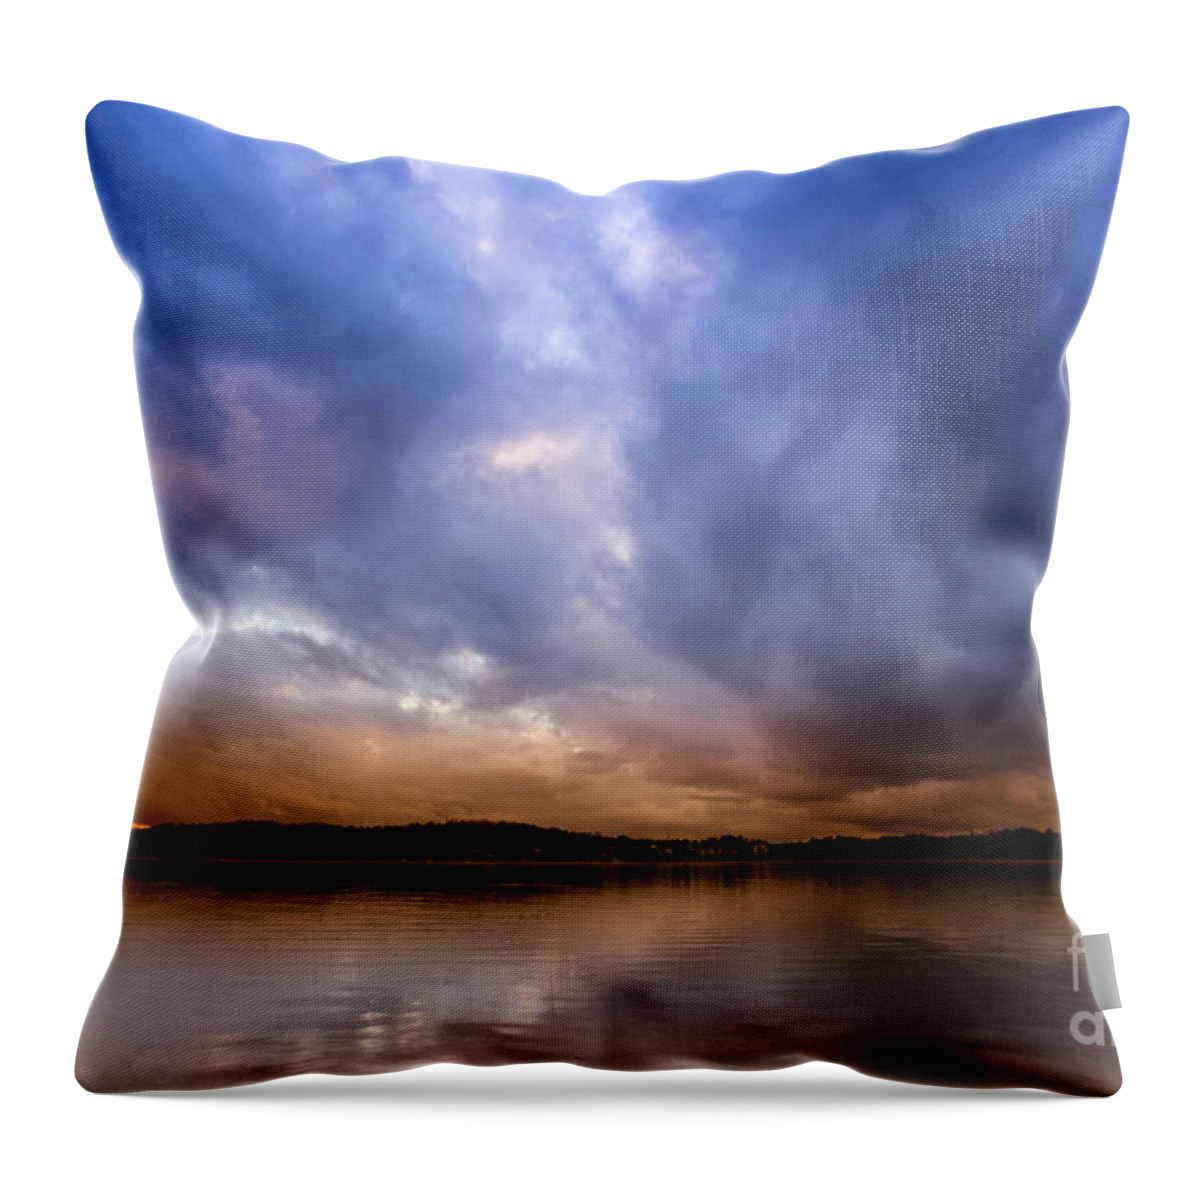 Lake-lanier Throw Pillow featuring the photograph Lake Lanier sunset by Bernd Laeschke